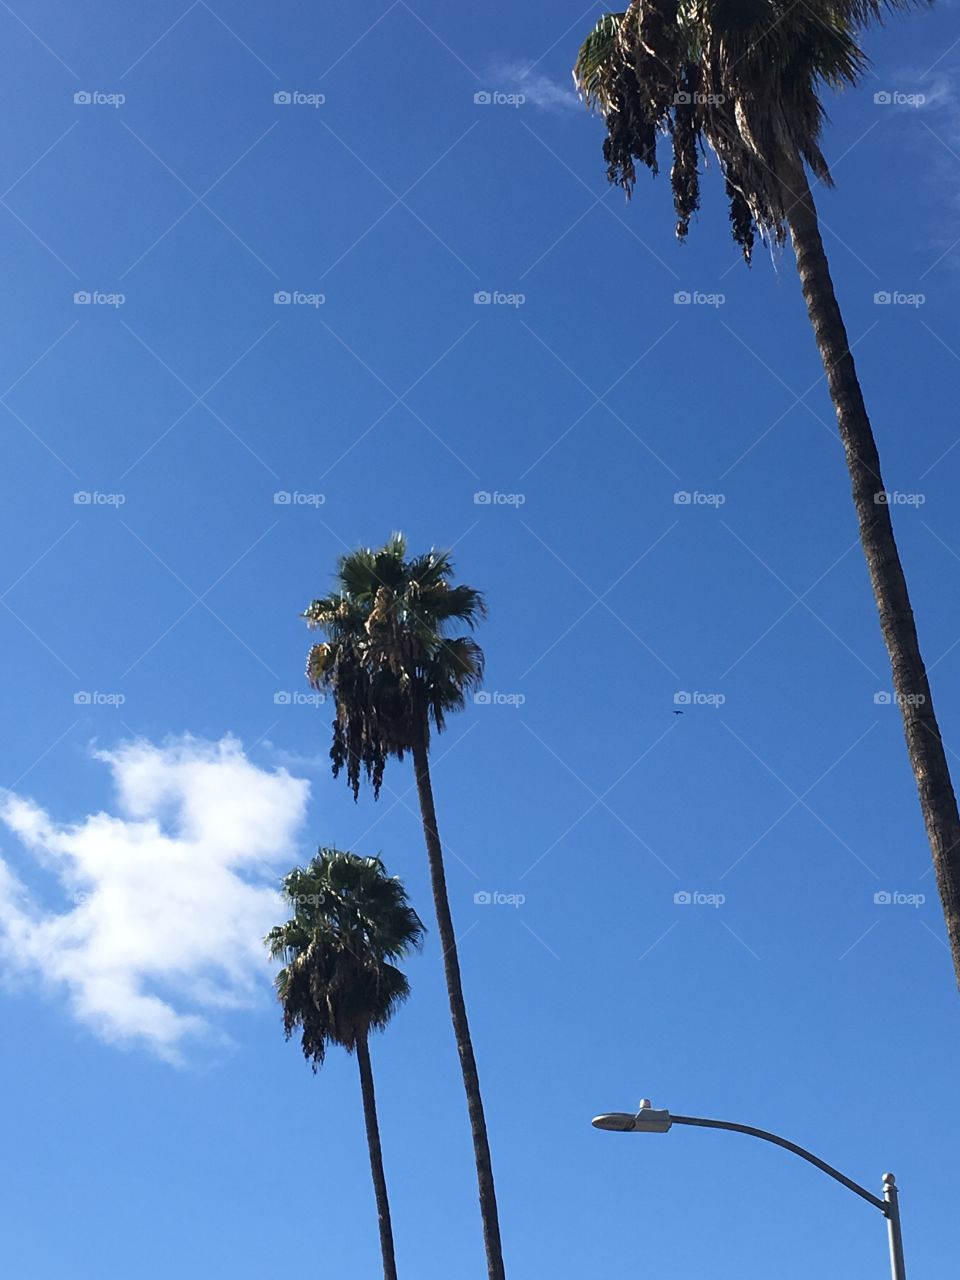 blue sky and palm trees
Los angeles CA USA